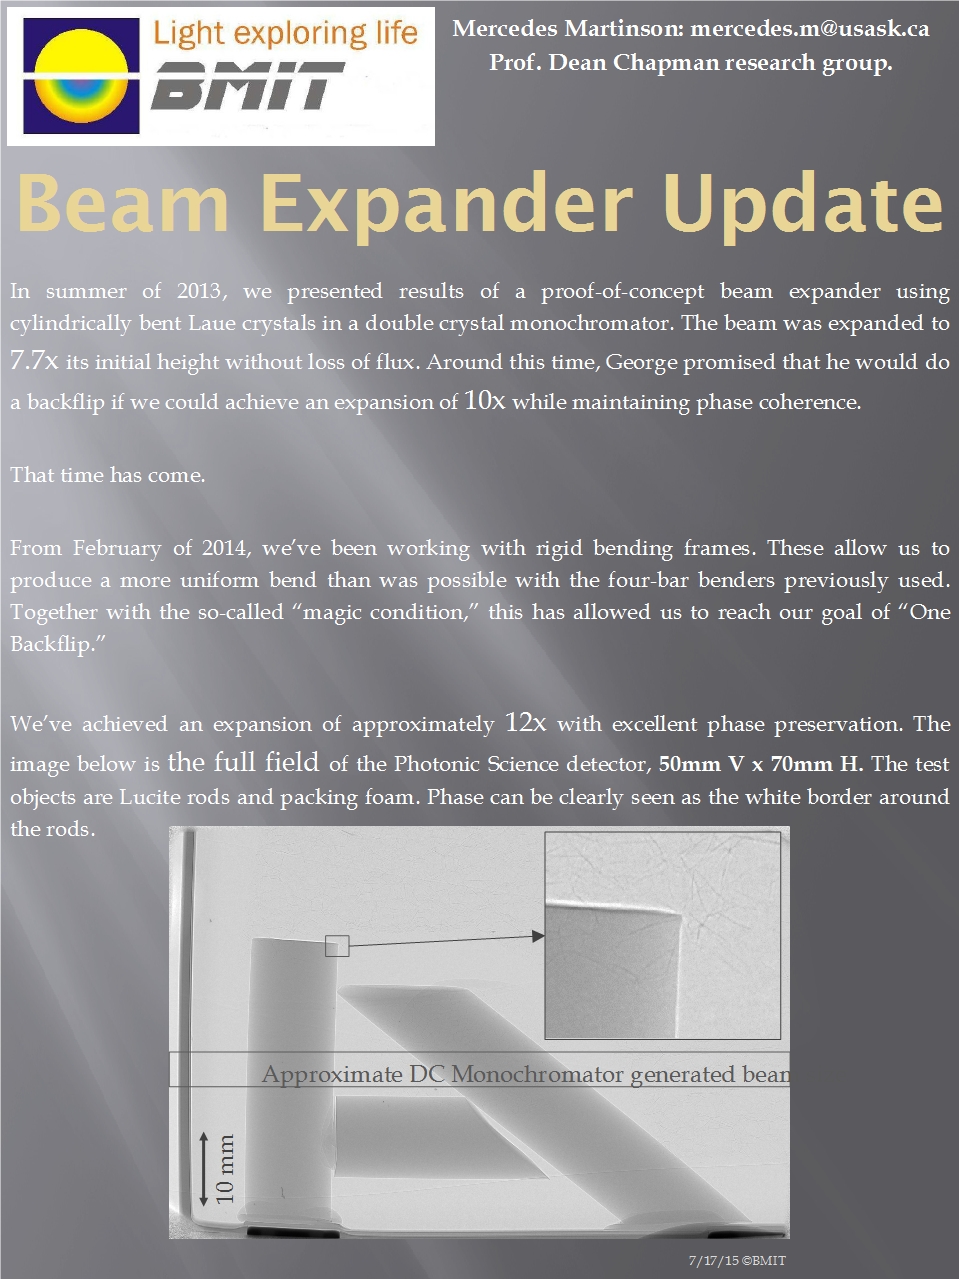 Beam Expander Update Image